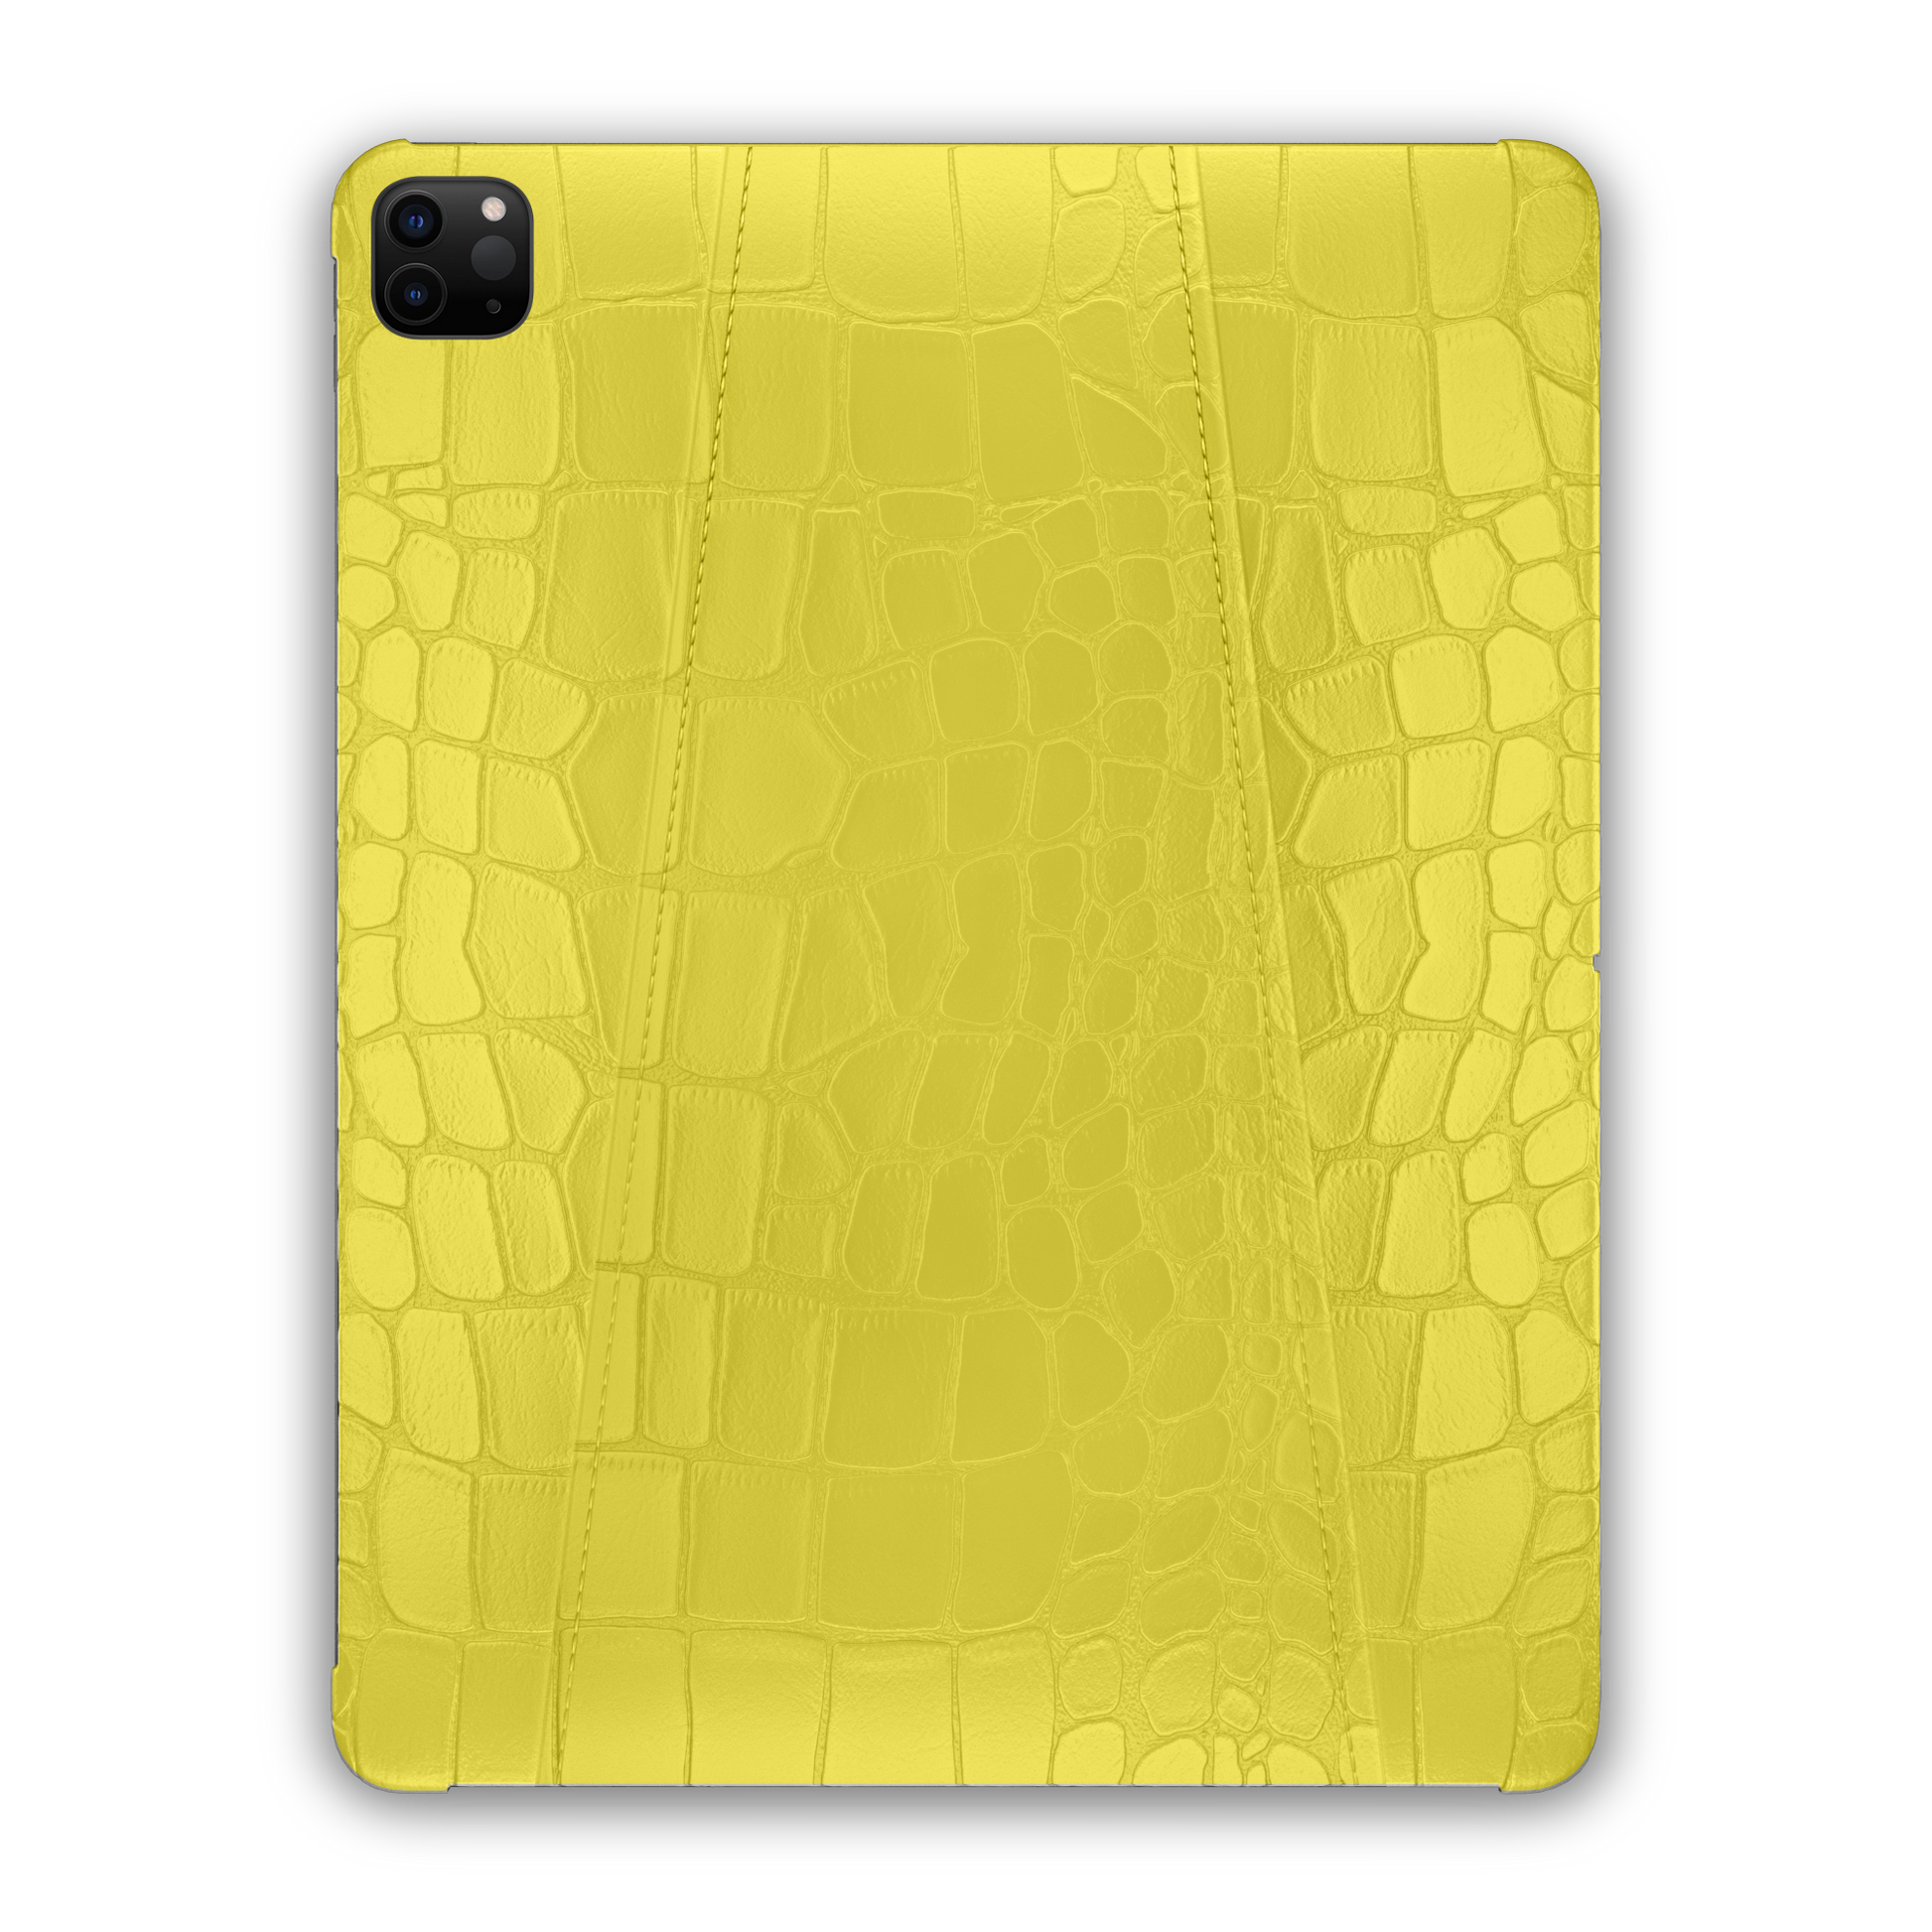 Ipad Pro (6th Gen) 12.9-inch Yellow Alligator Case